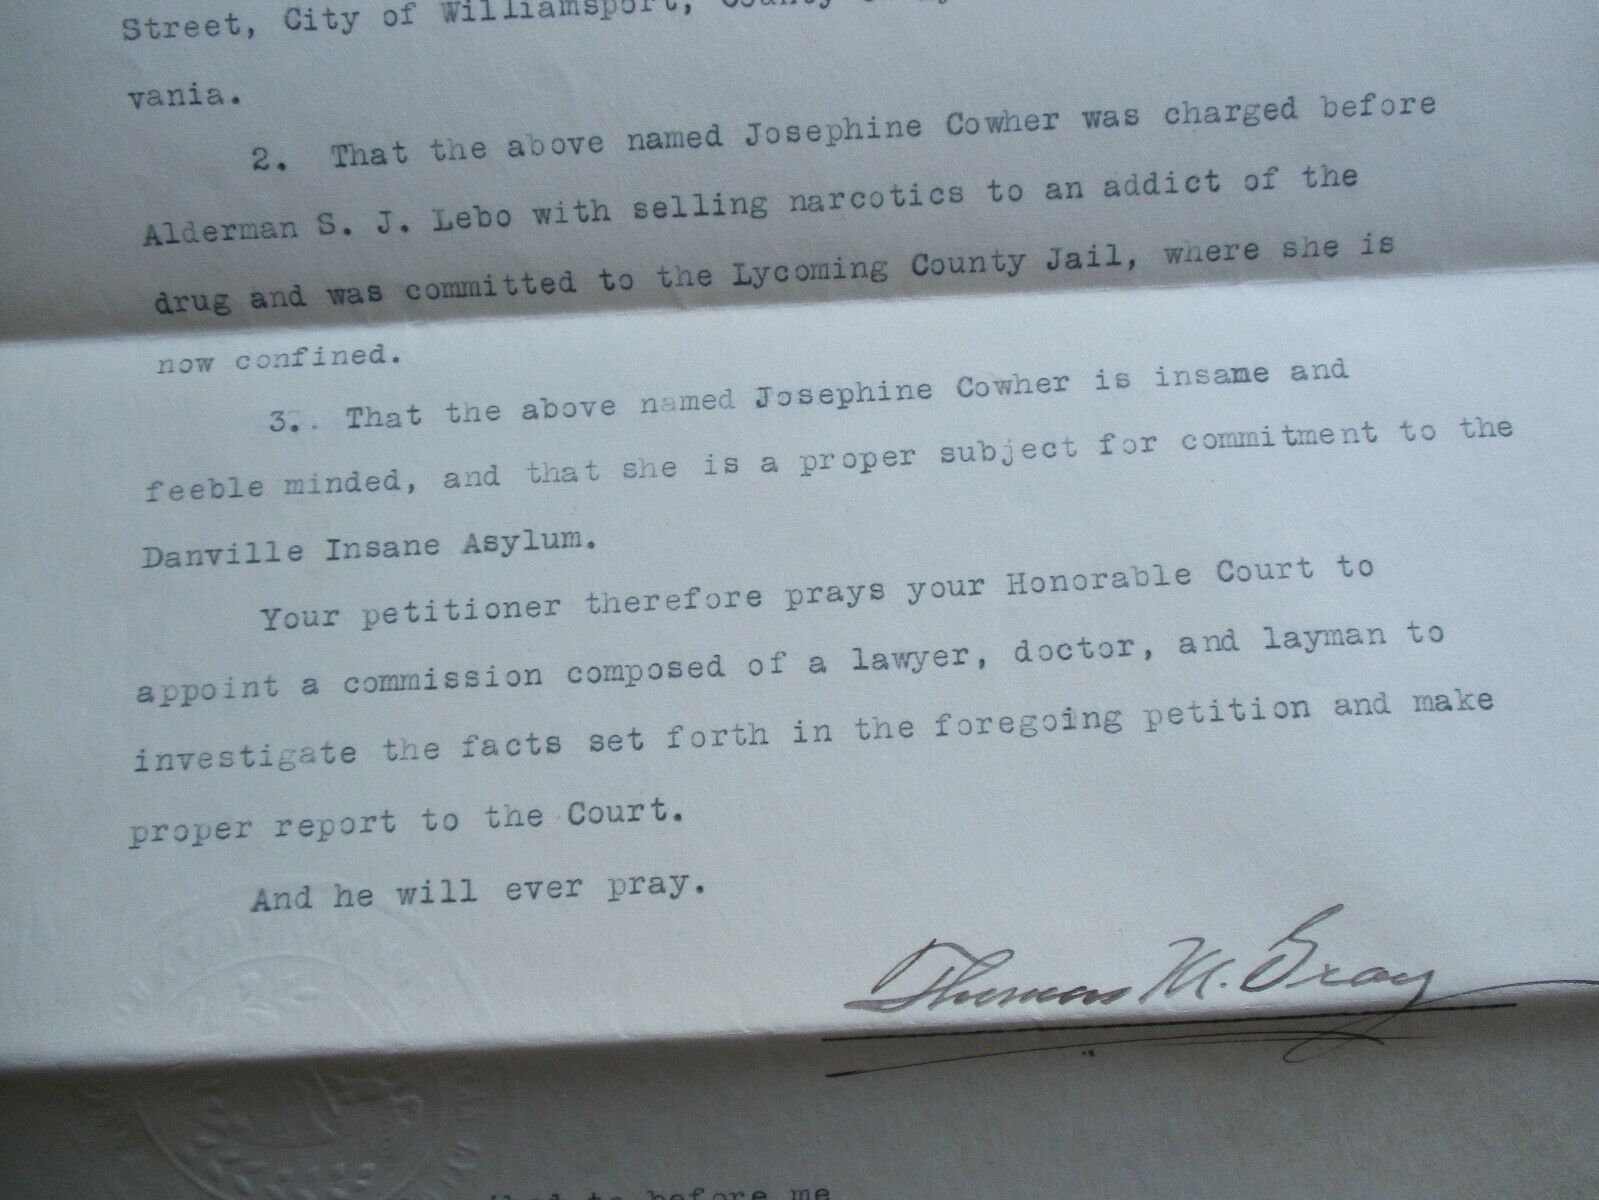 1923 (2) Insane Narcotic Dealer Sent To Danville Insane Hospital Signed Document